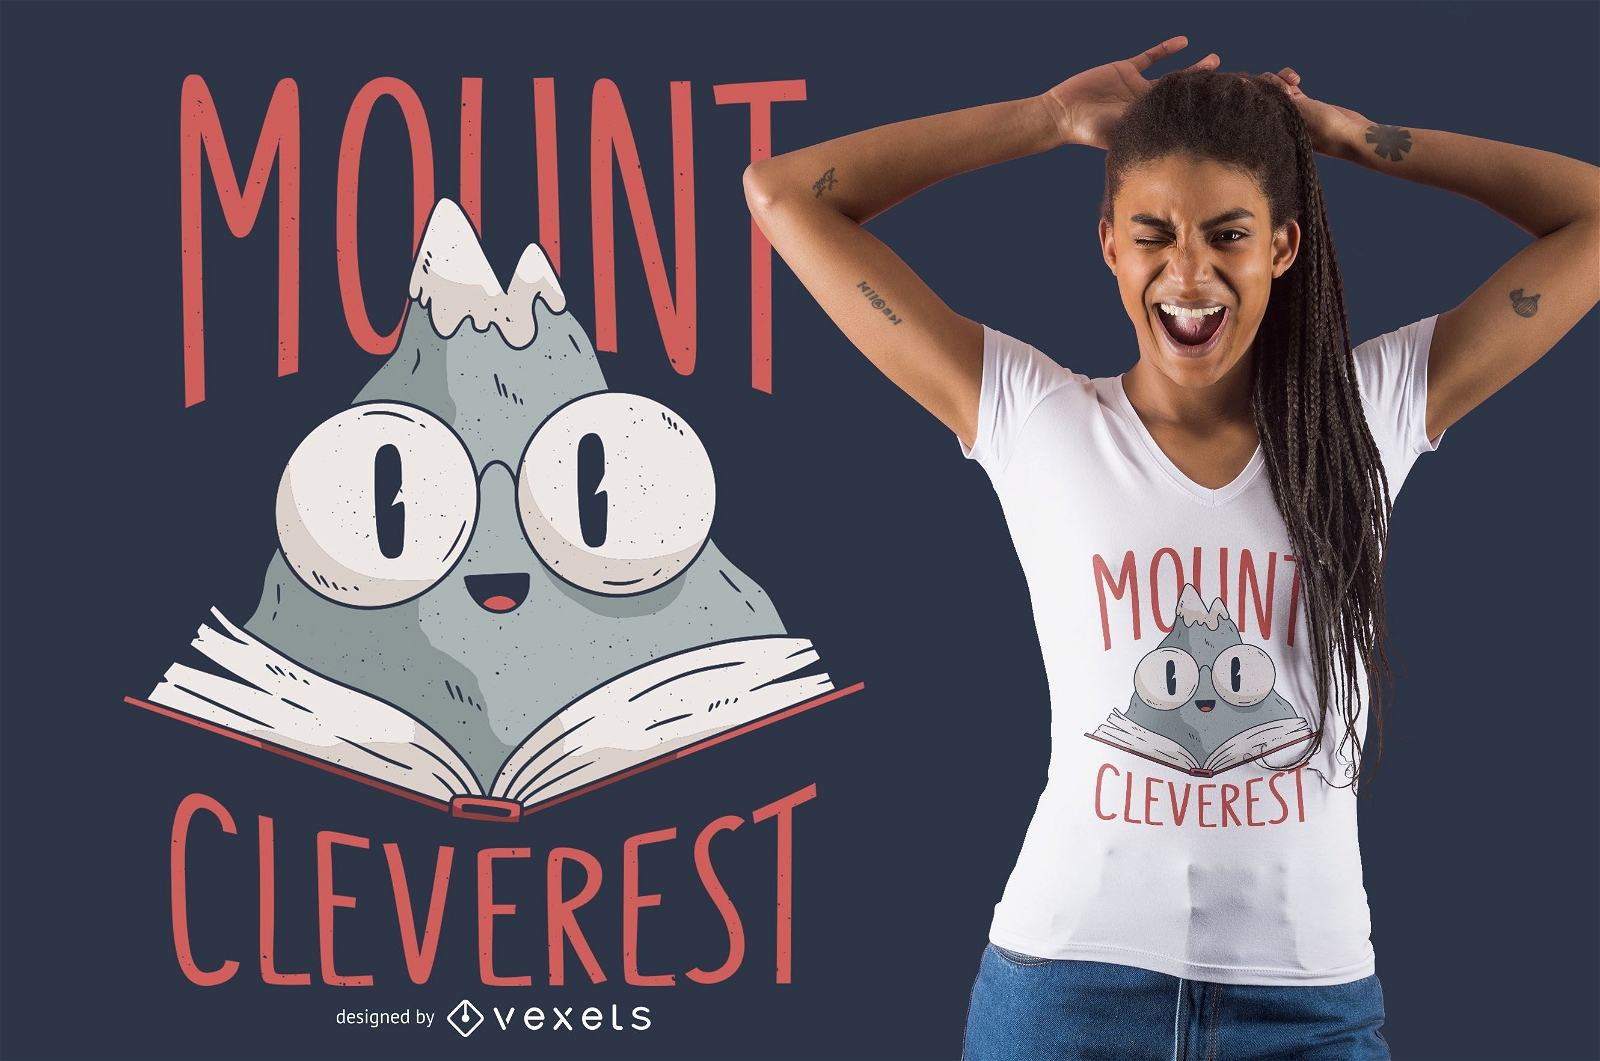 Mount cleverest t-shirt design